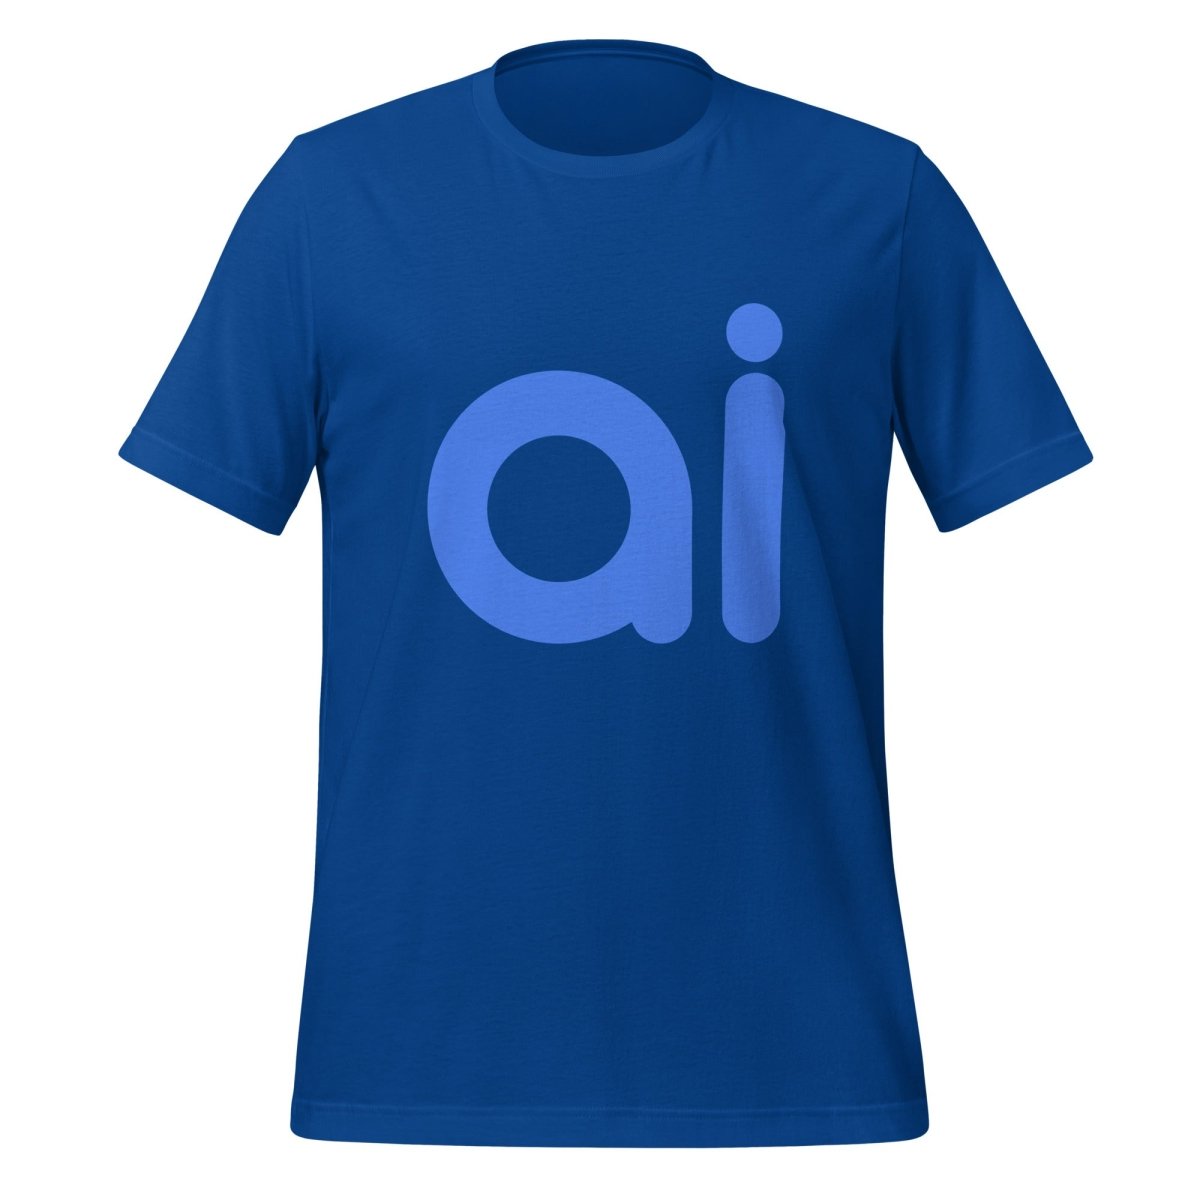 ai T - Shirt (unisex) - True Royal - AI Store